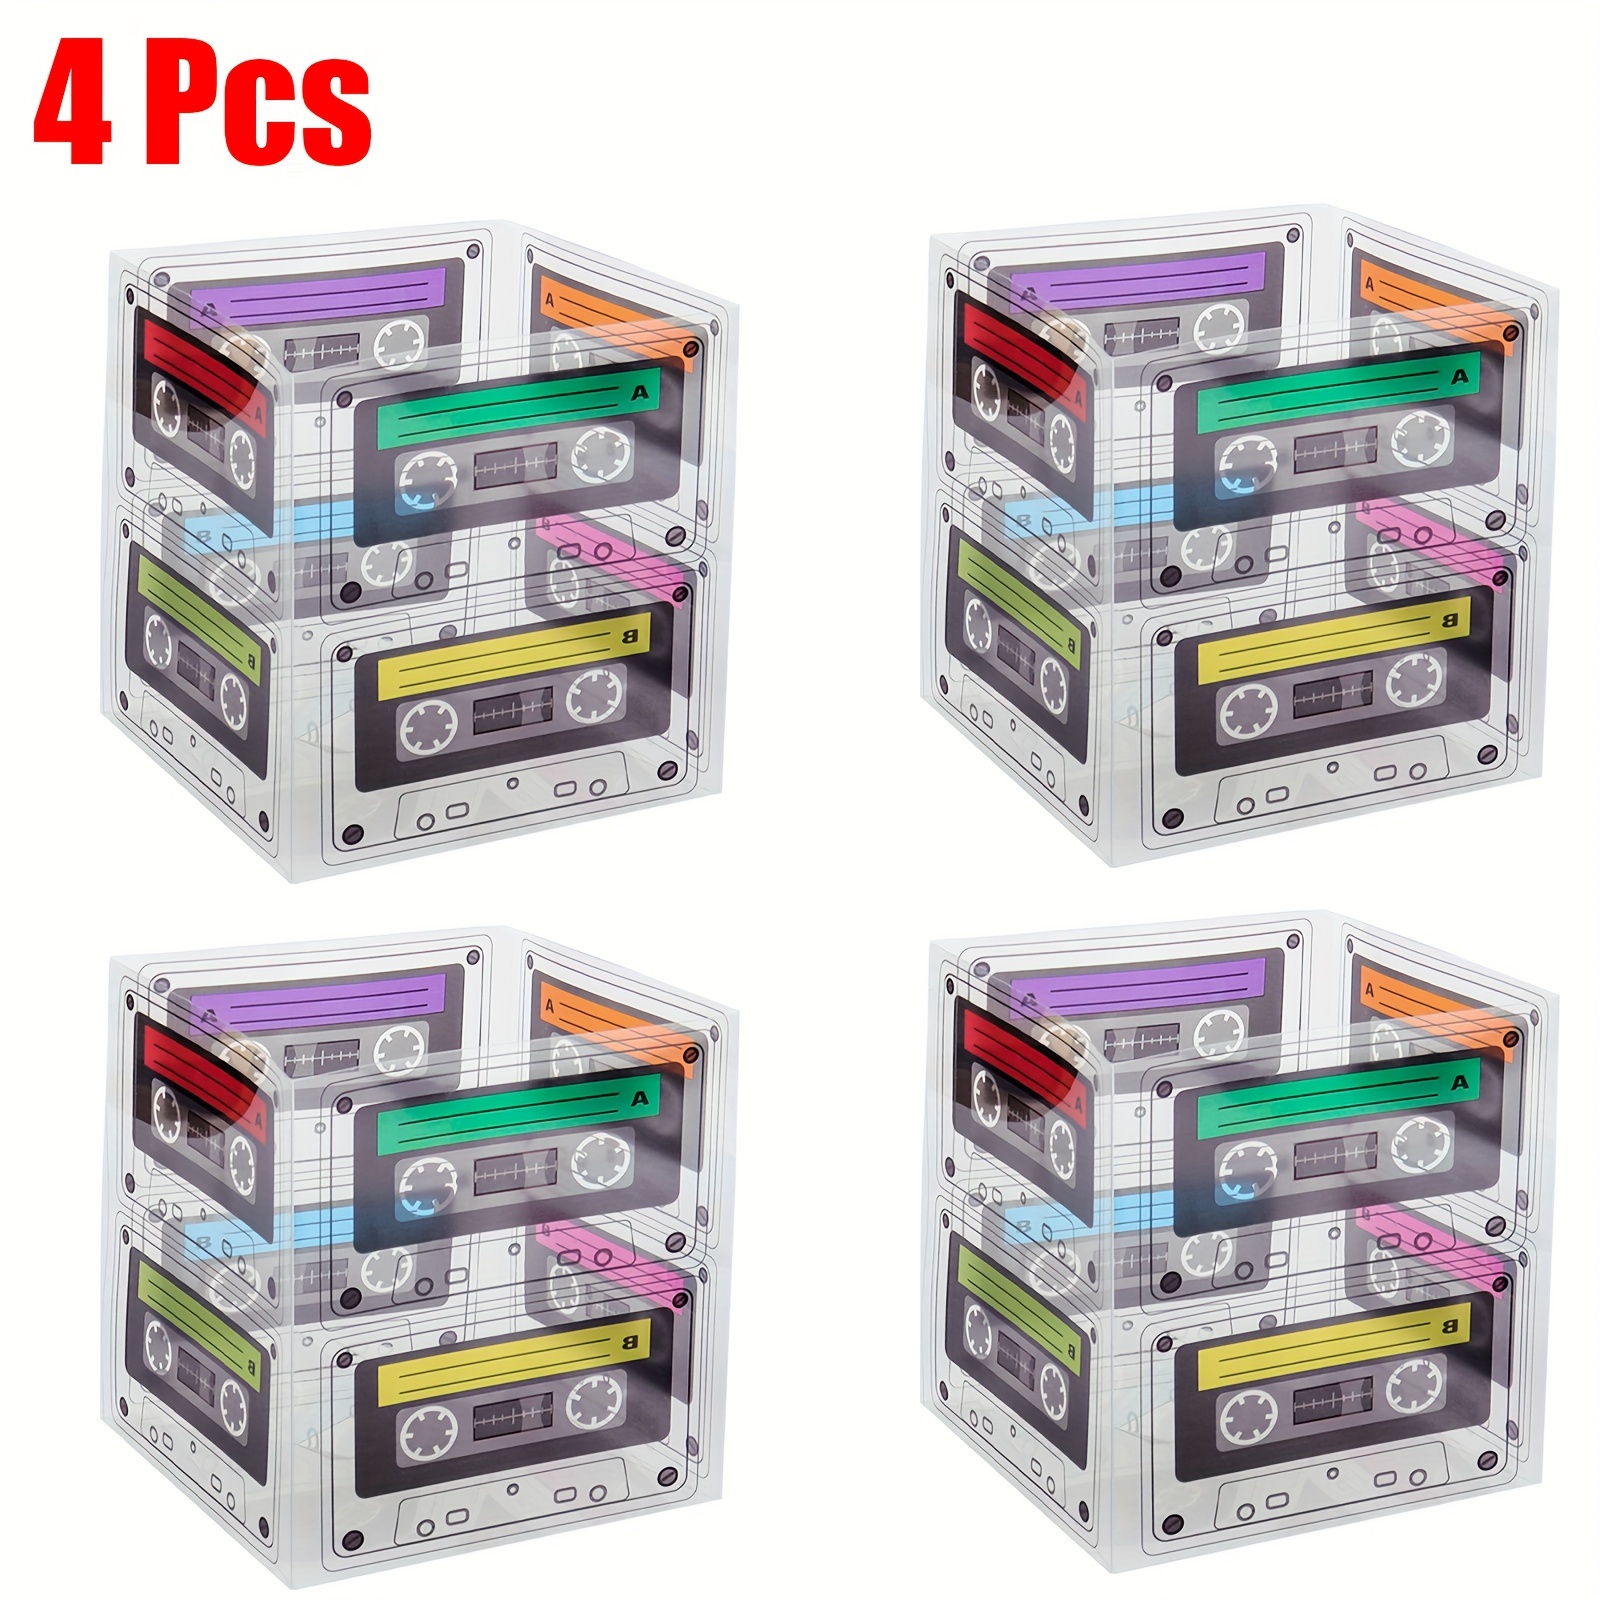 

4-piece Retro Cassette Tape Centerpieces For 80s & 90s Parties - Hip Hop Themed Table Decor, Durable Pvc Party Favor Holders For Candy & Snacks